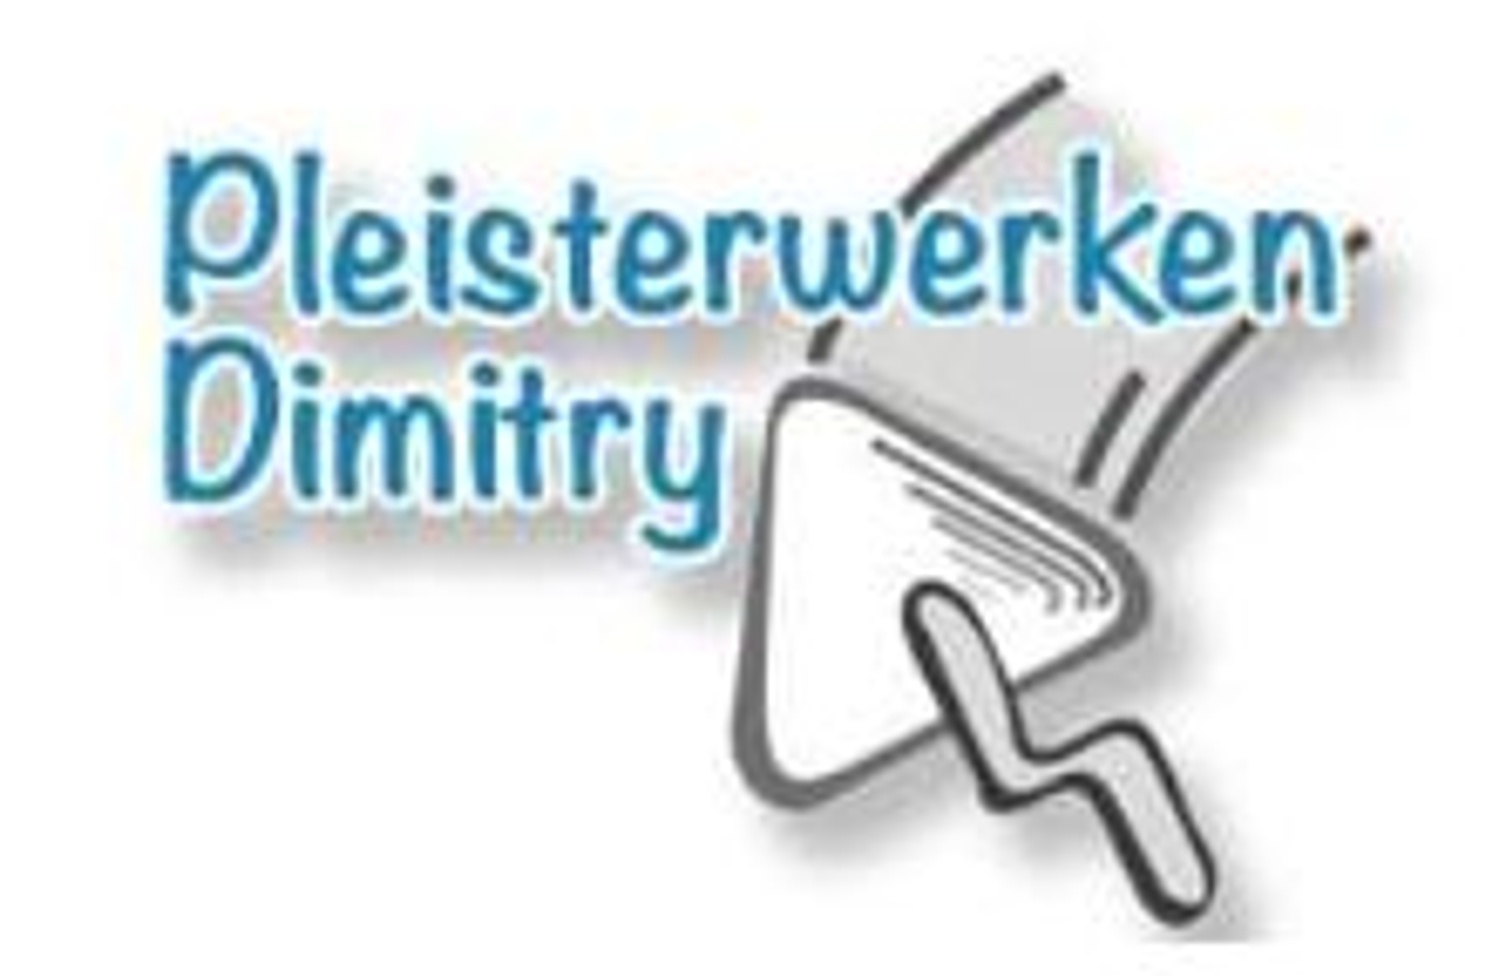 Dewaegemaeker Dimitry logo